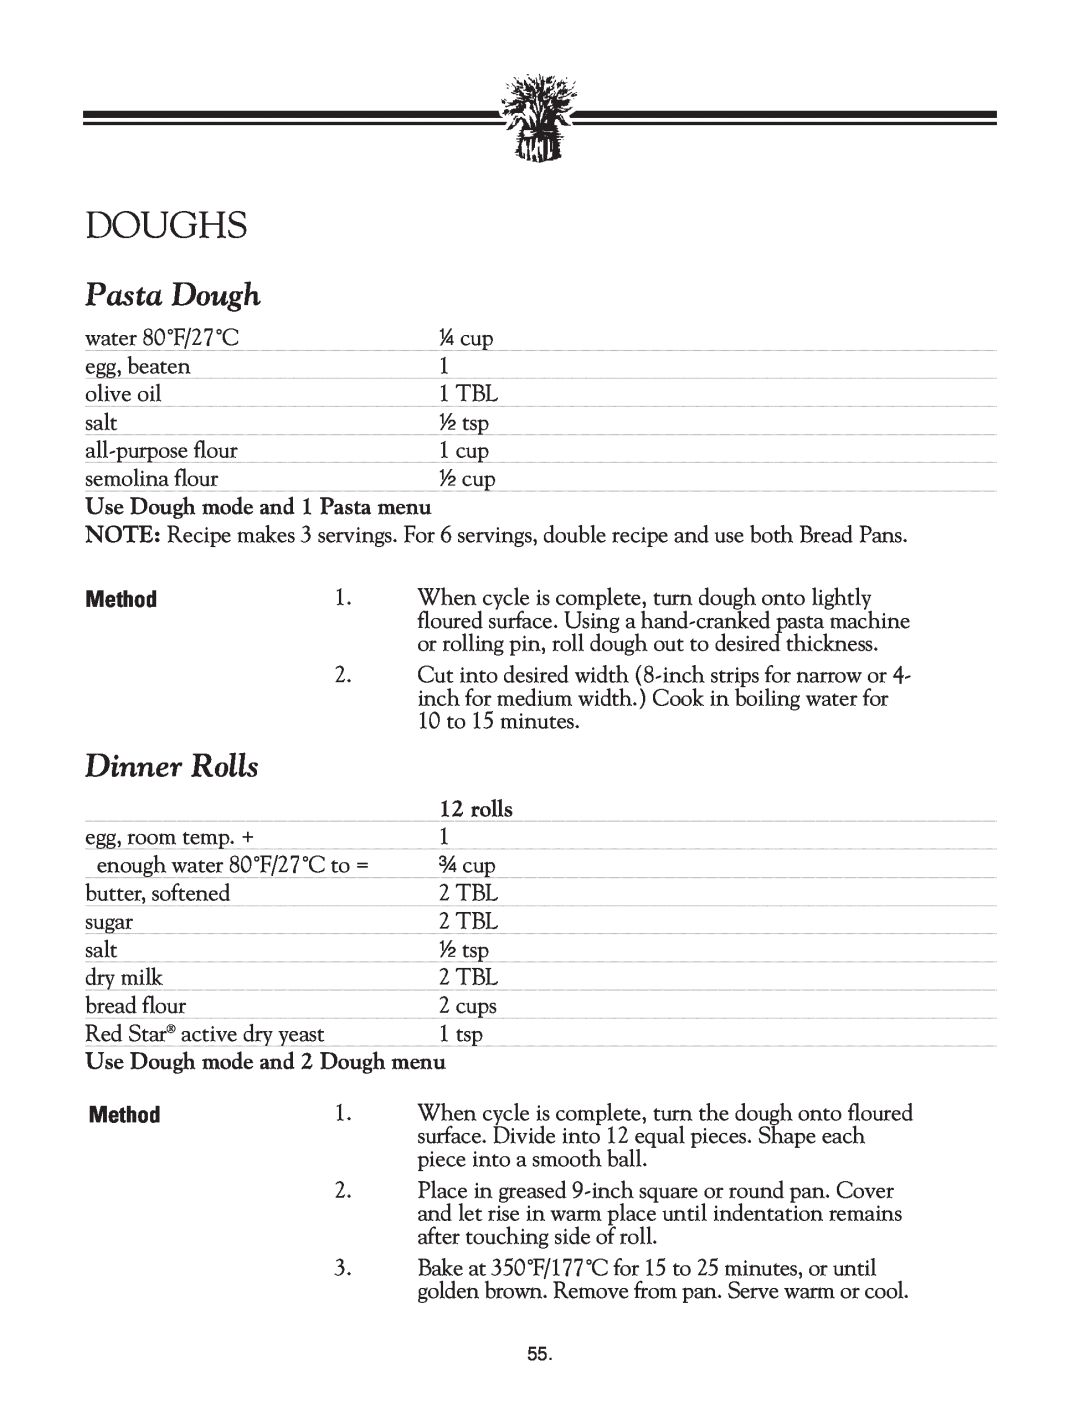 Breadman TR2828G instruction manual Doughs, Pasta Dough, Dinner Rolls, Method 